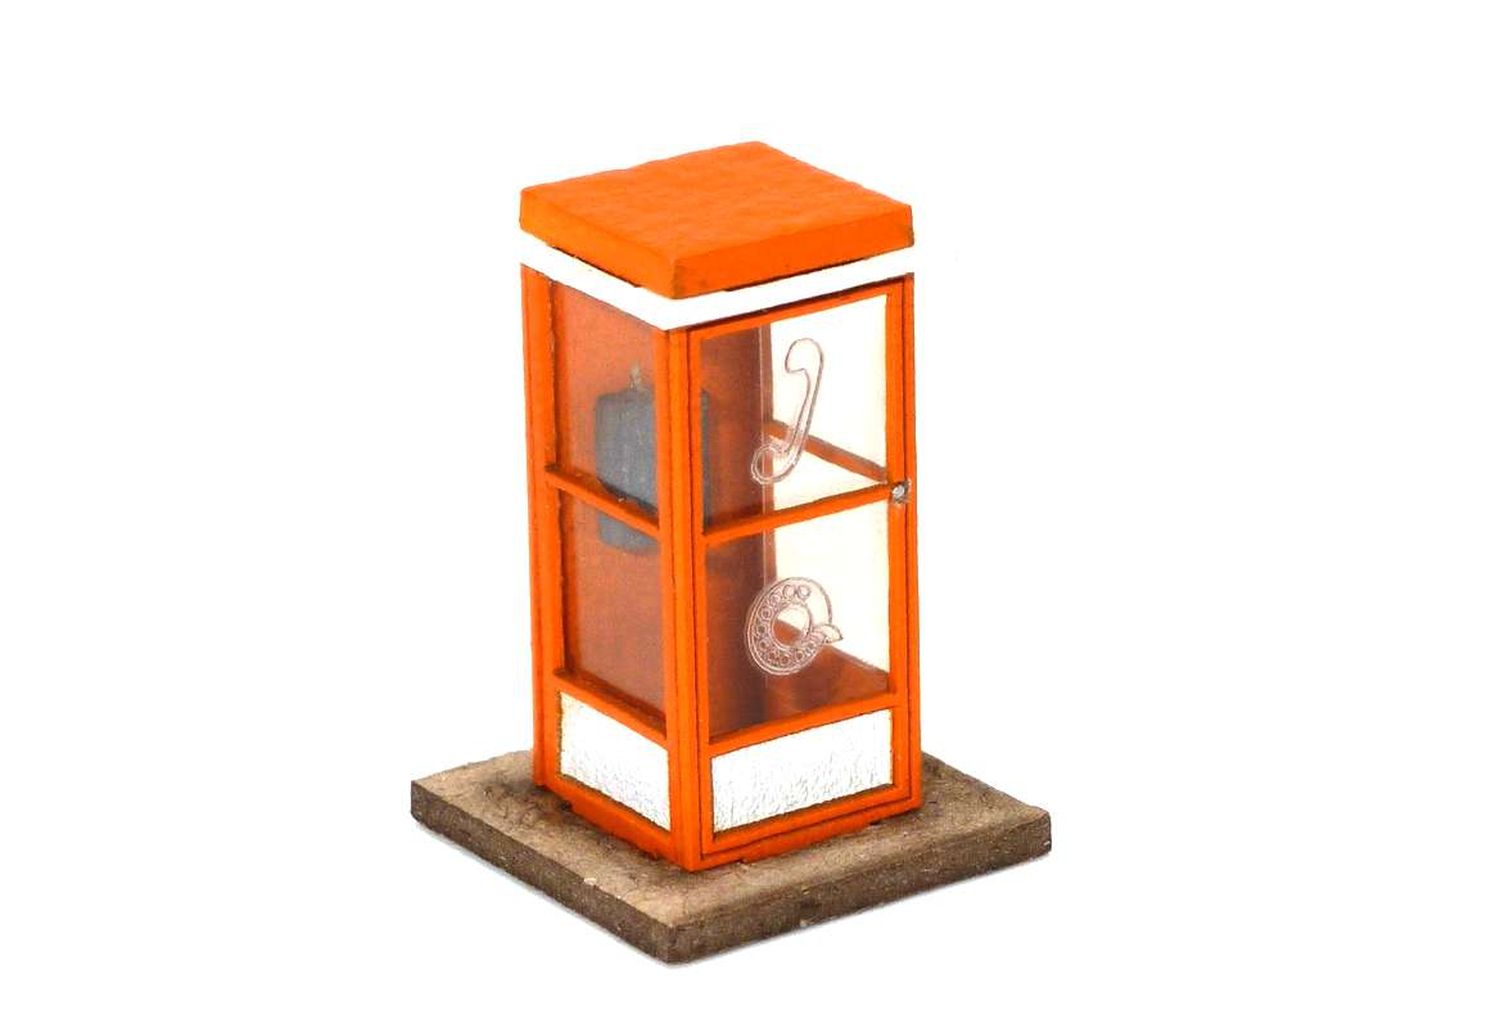 igra 110004 - Telefonzelle orange, 15 x 15 x 21, Bausatz